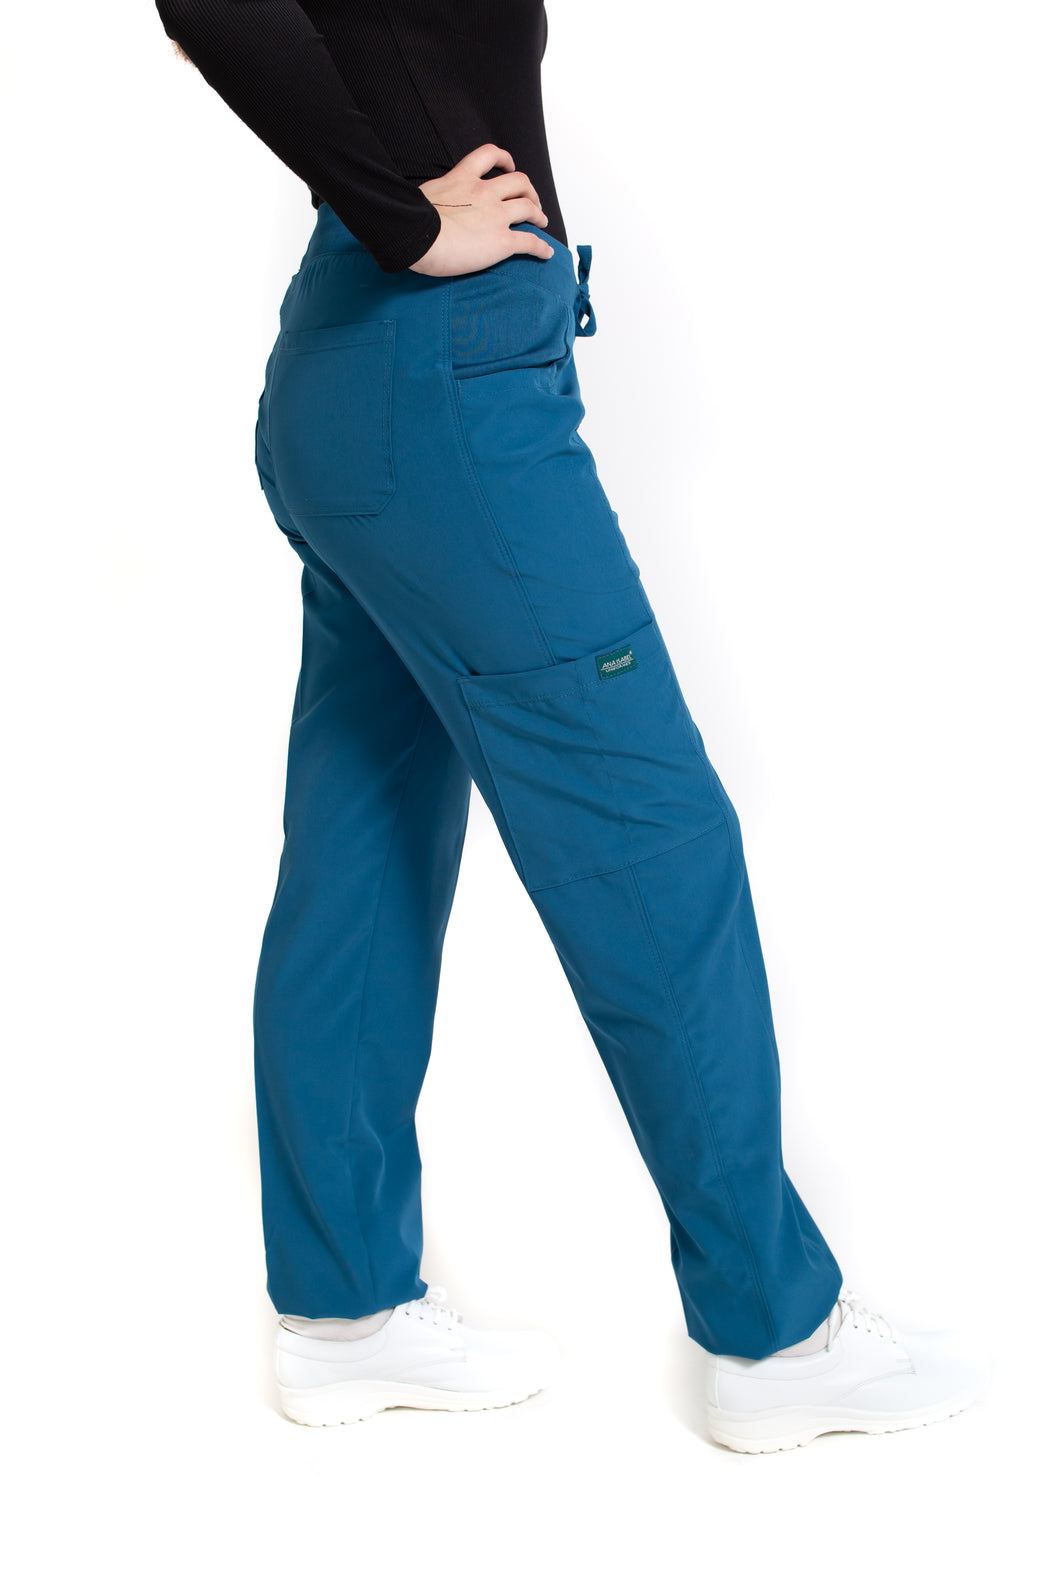 Pantalón Pant EV-120 REPELENTE A FLUIDOS-Color CARIBE Dama-Ana Isabel Uniformes